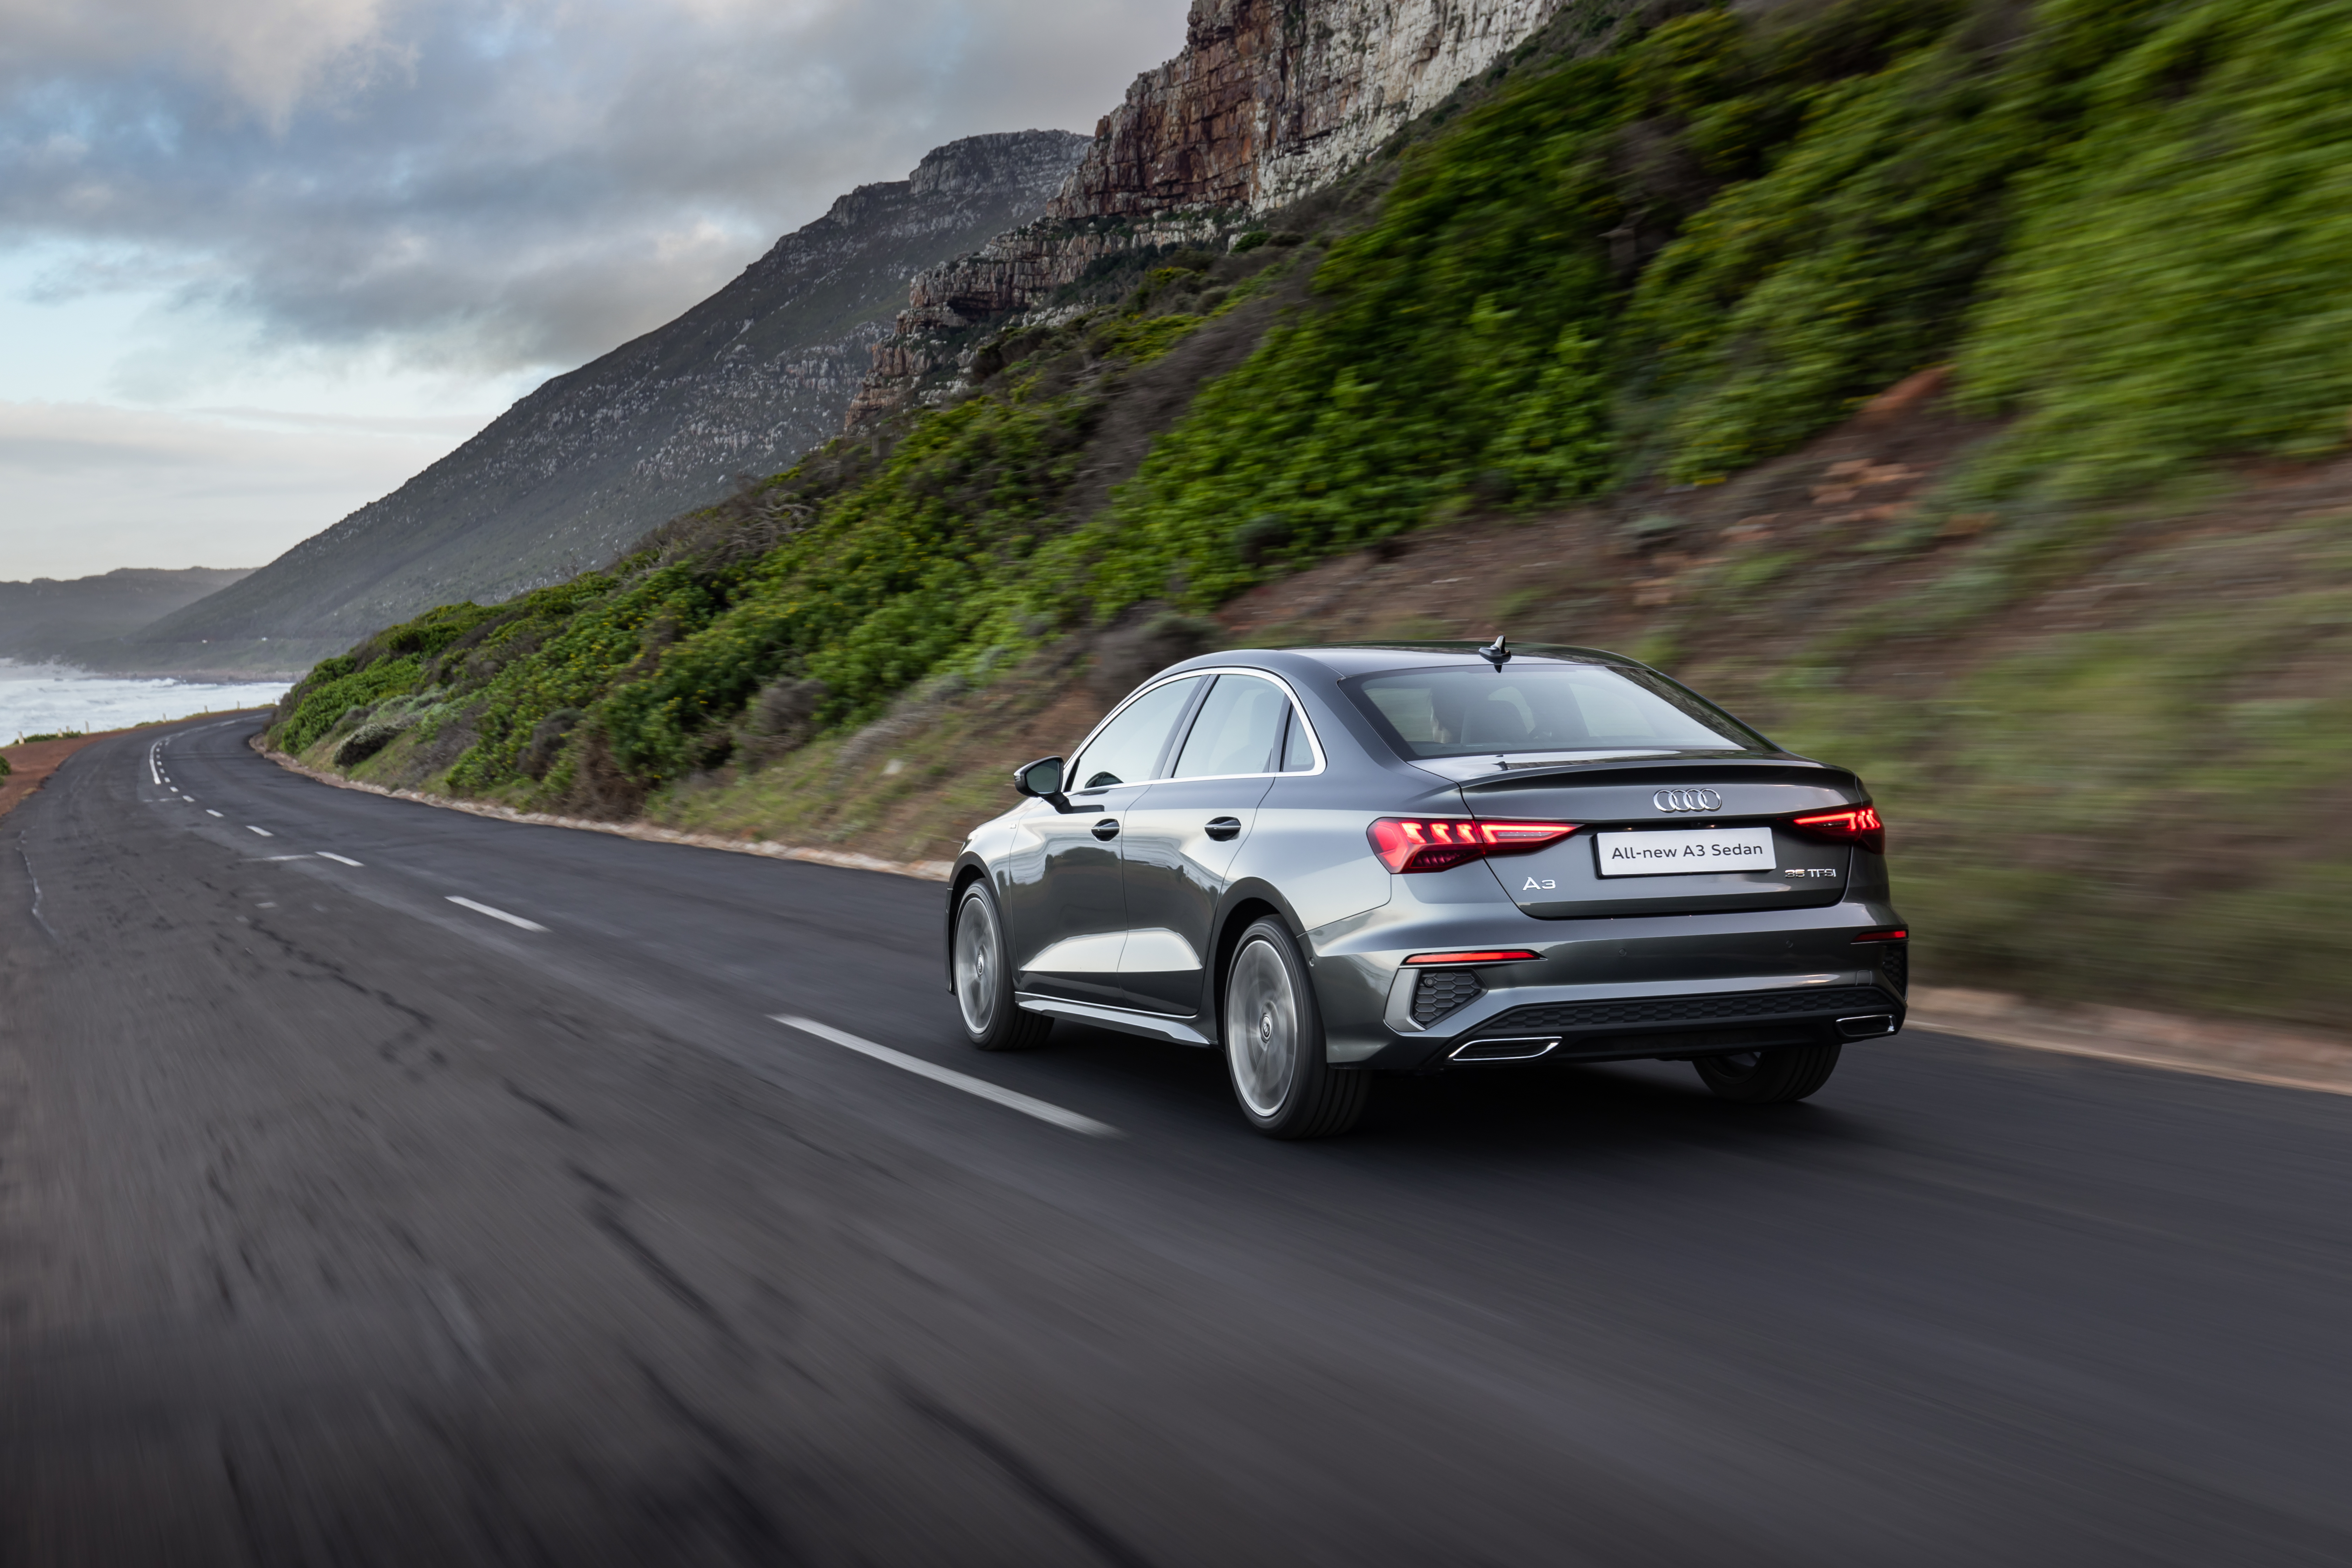 Vehicles Audi A3 Sedan HD Wallpaper | Background Image